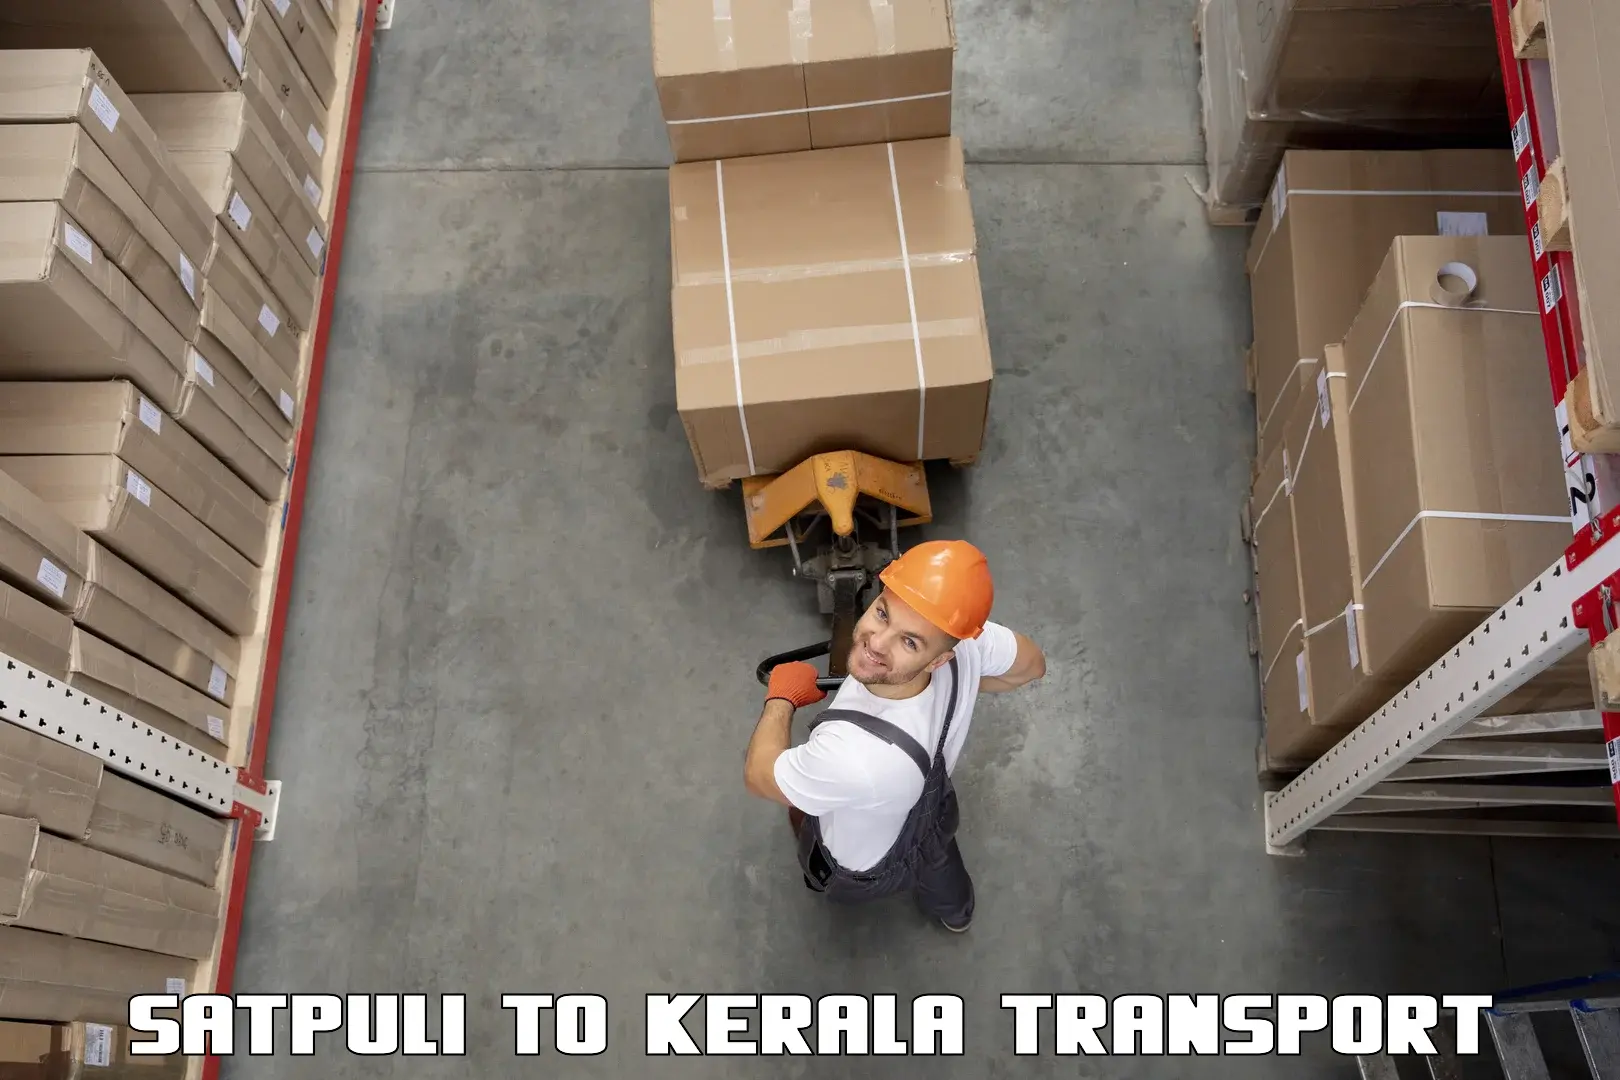 Online transport service Satpuli to Kerala